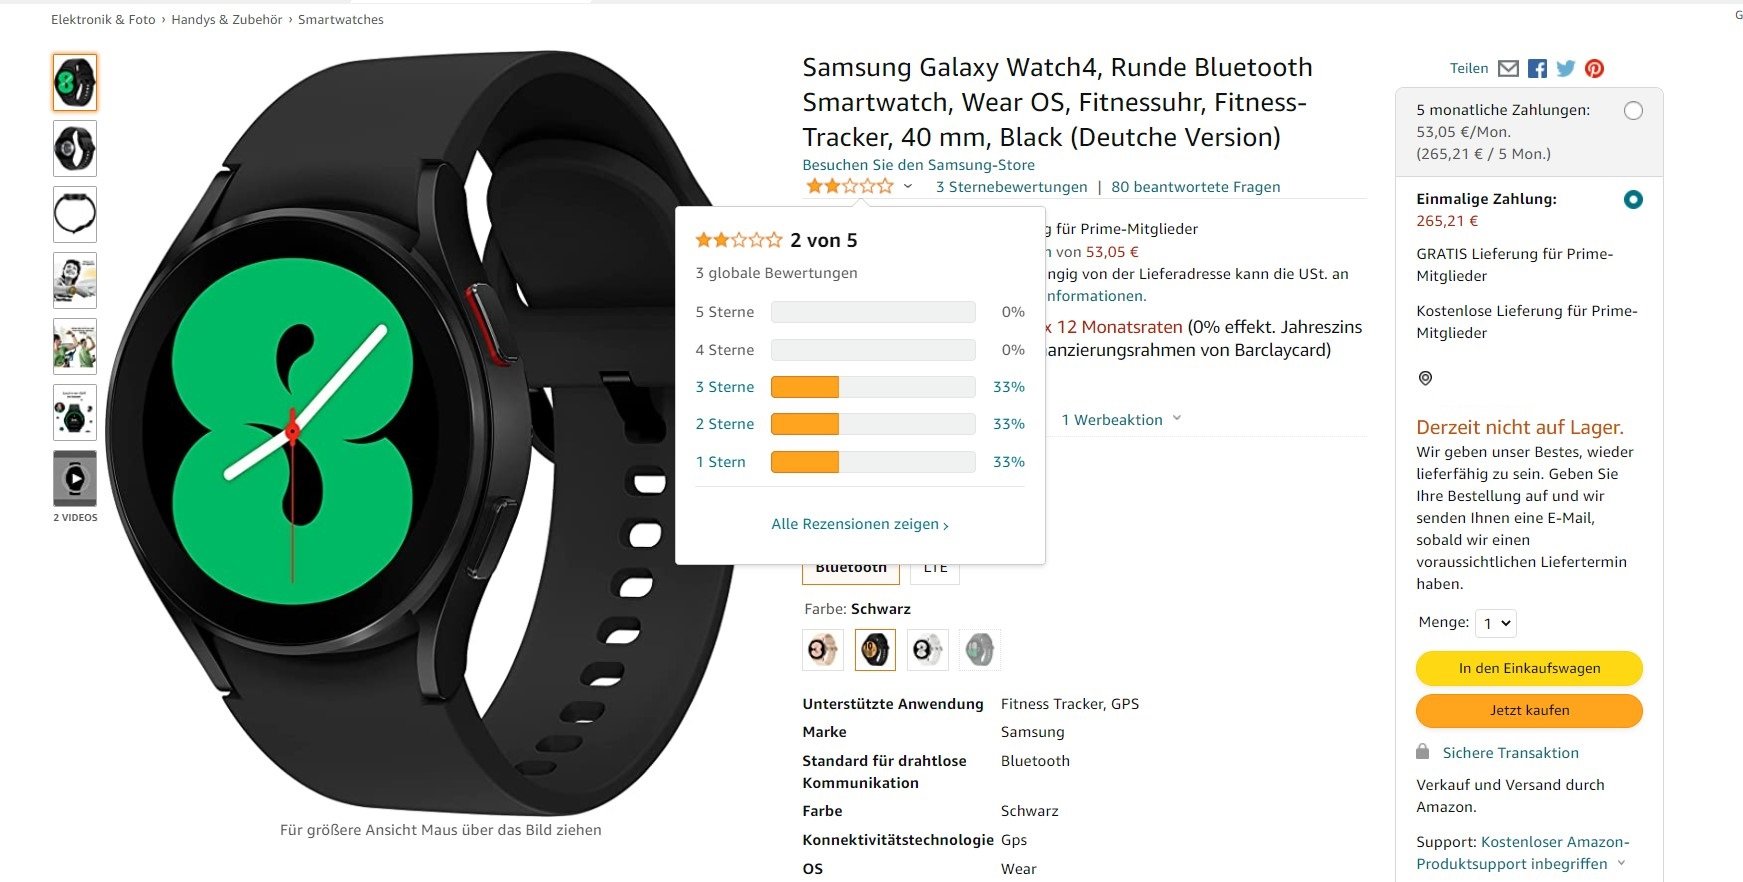 Как установить звонок на часы. Часы Samsung Galaxy watch 4 функции. Samsung watch 4 аккумулятор. Как настроить часы самсунг галакси watch. Samsung watch 4 коробка.